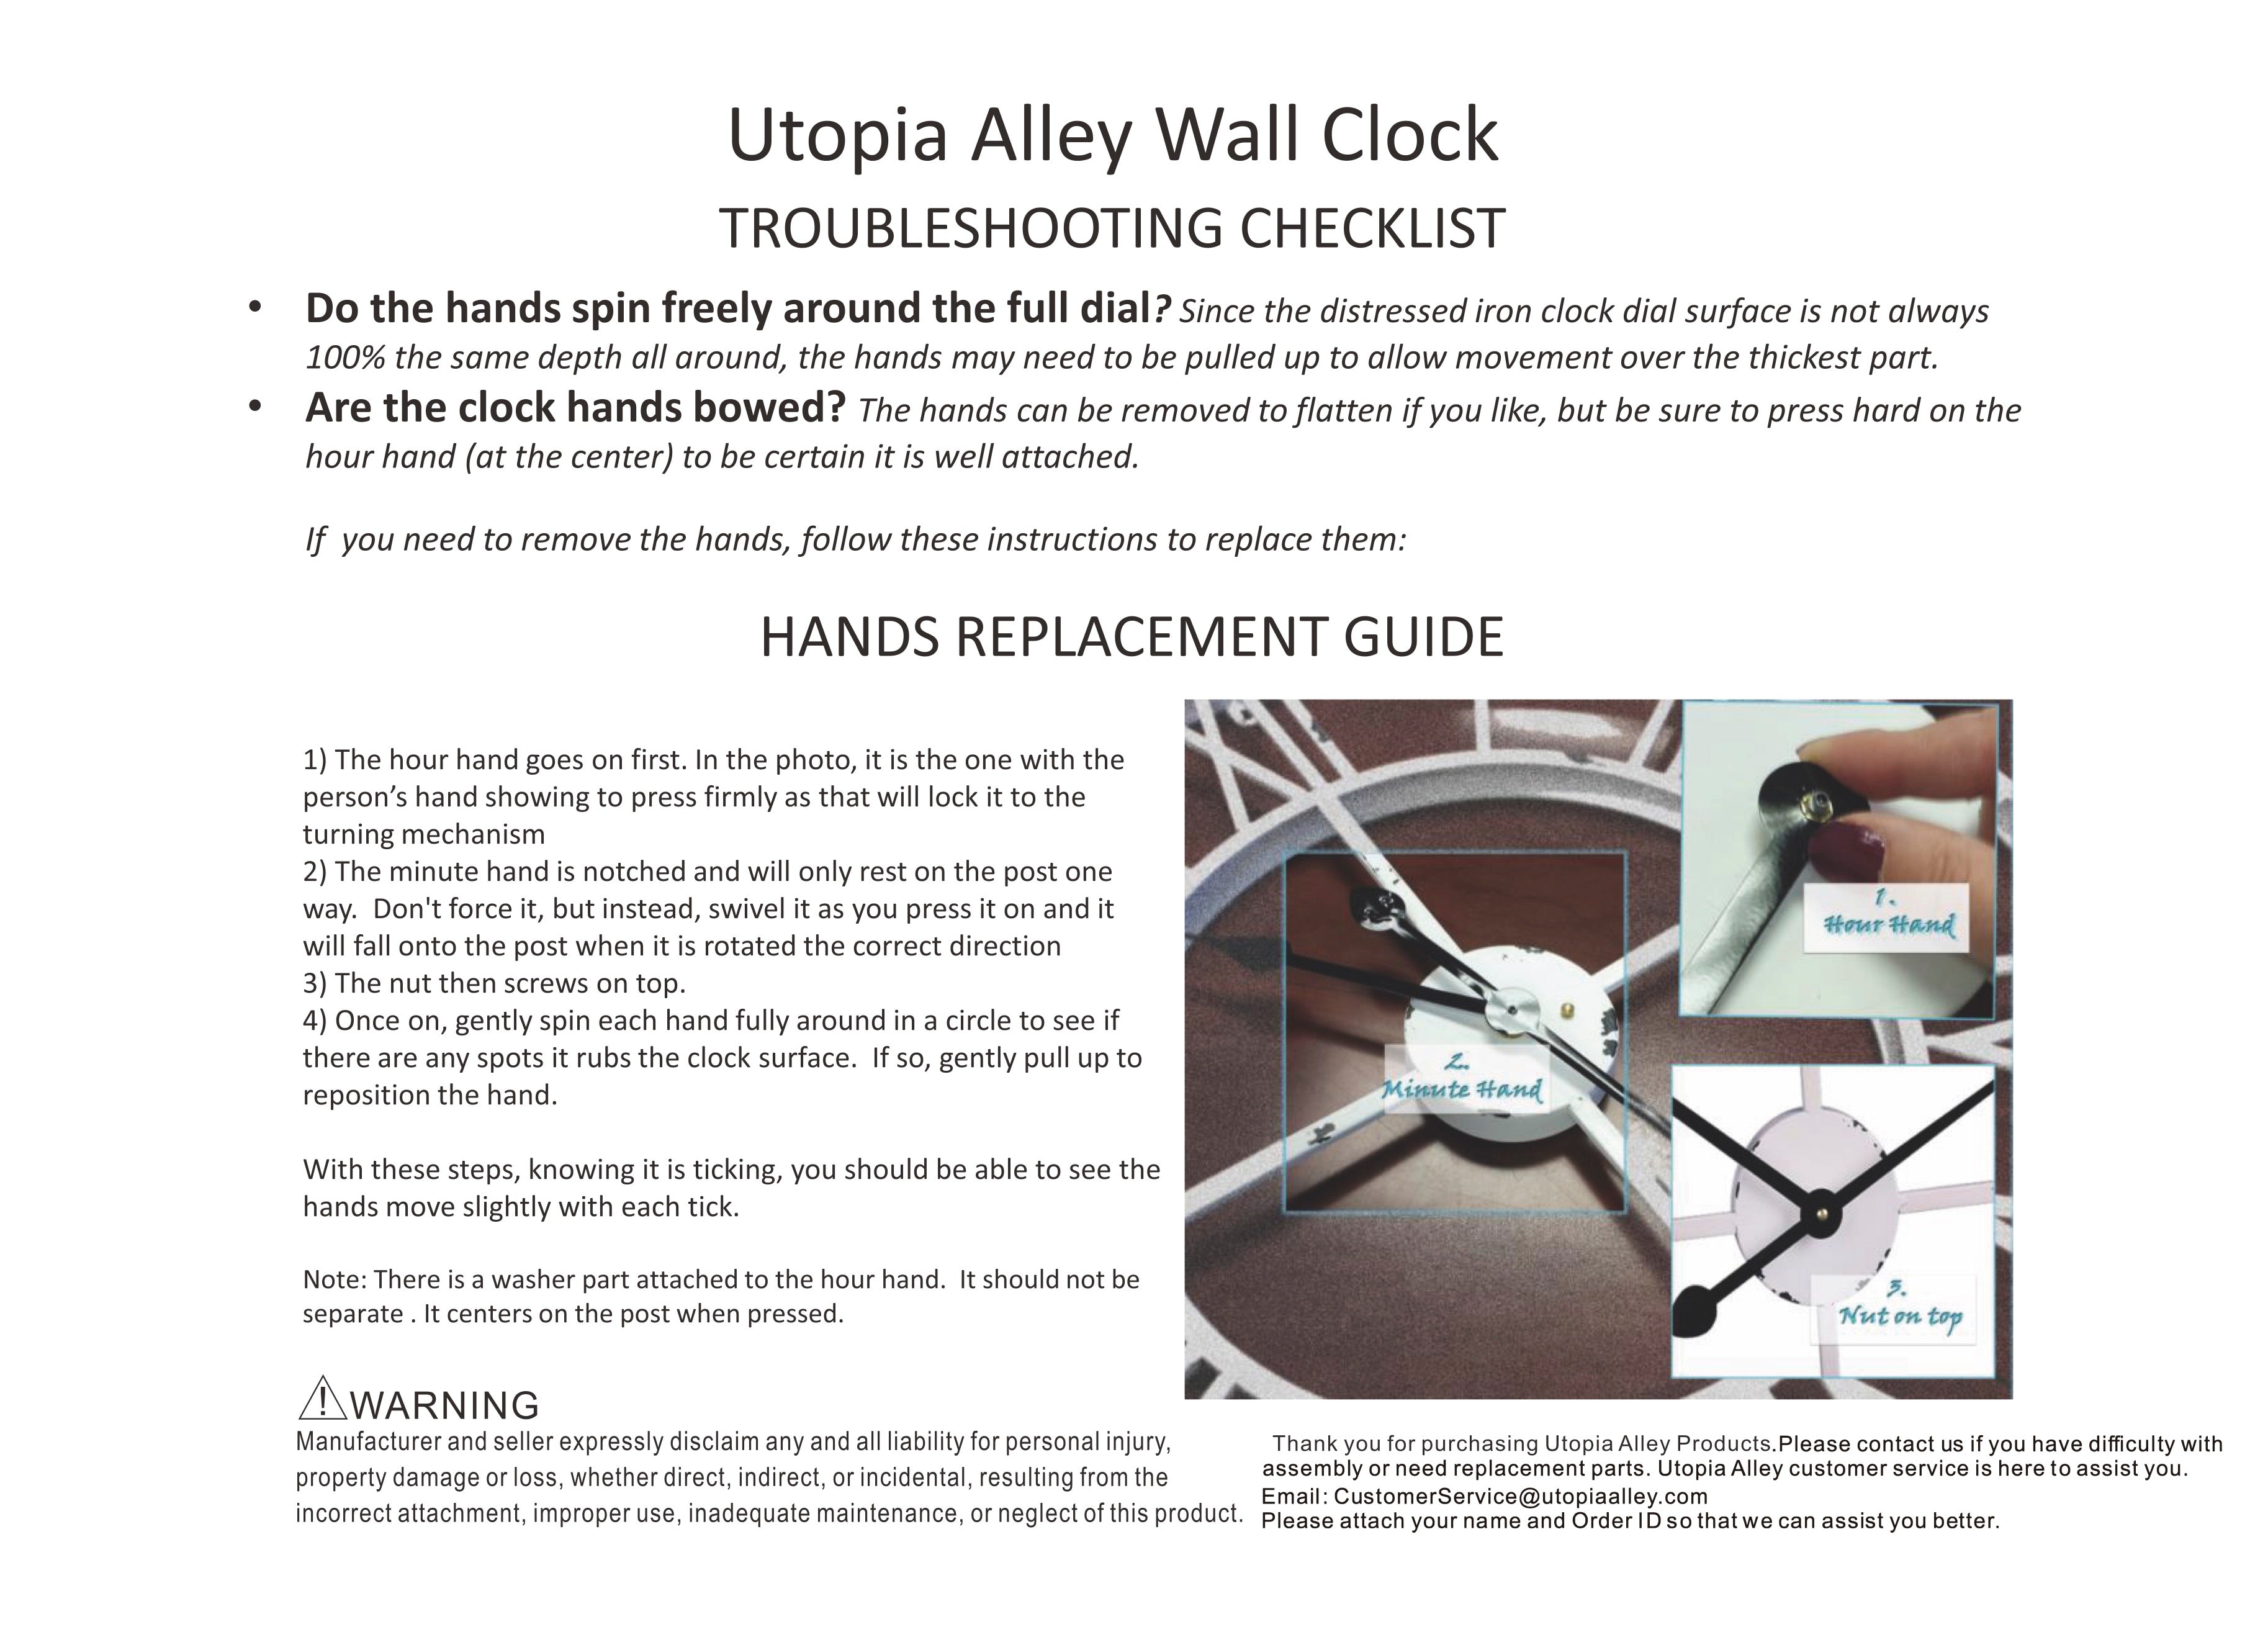 Loft97 Oversize Roman Square Wall Clock, 24